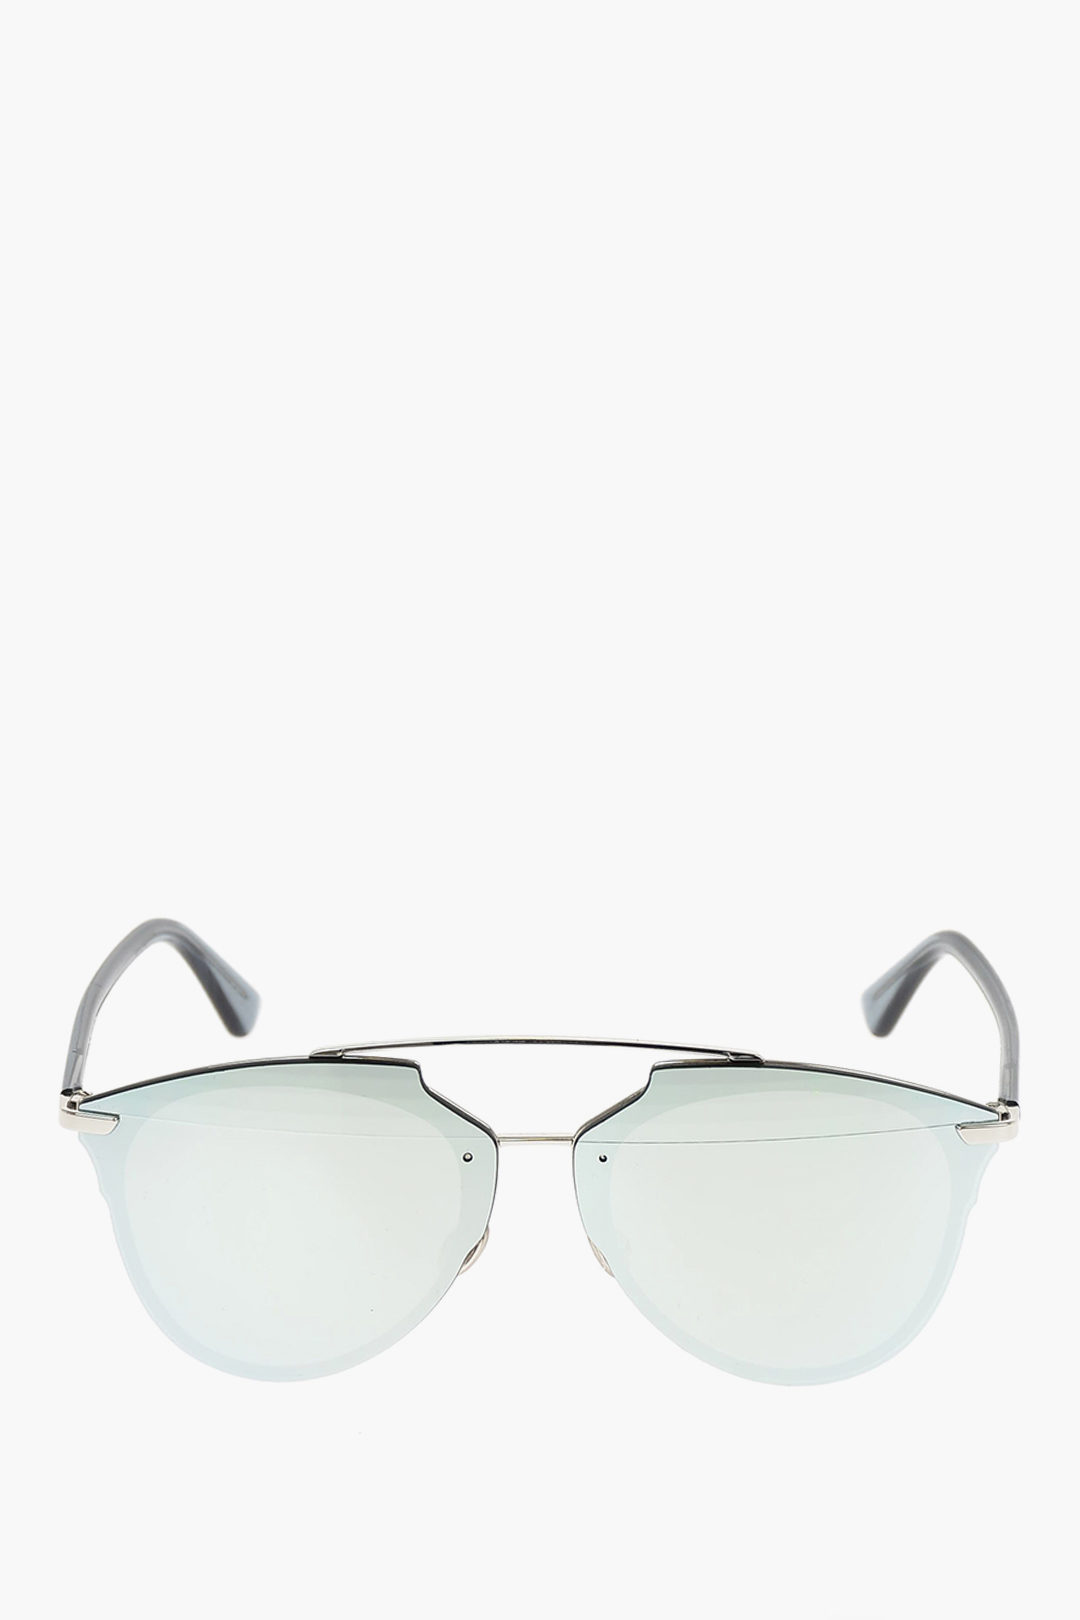 Buy Dior Reflected P Pixel Palladium Transparent BlackGold 6311140  Unisex Sunglasses at Amazonin